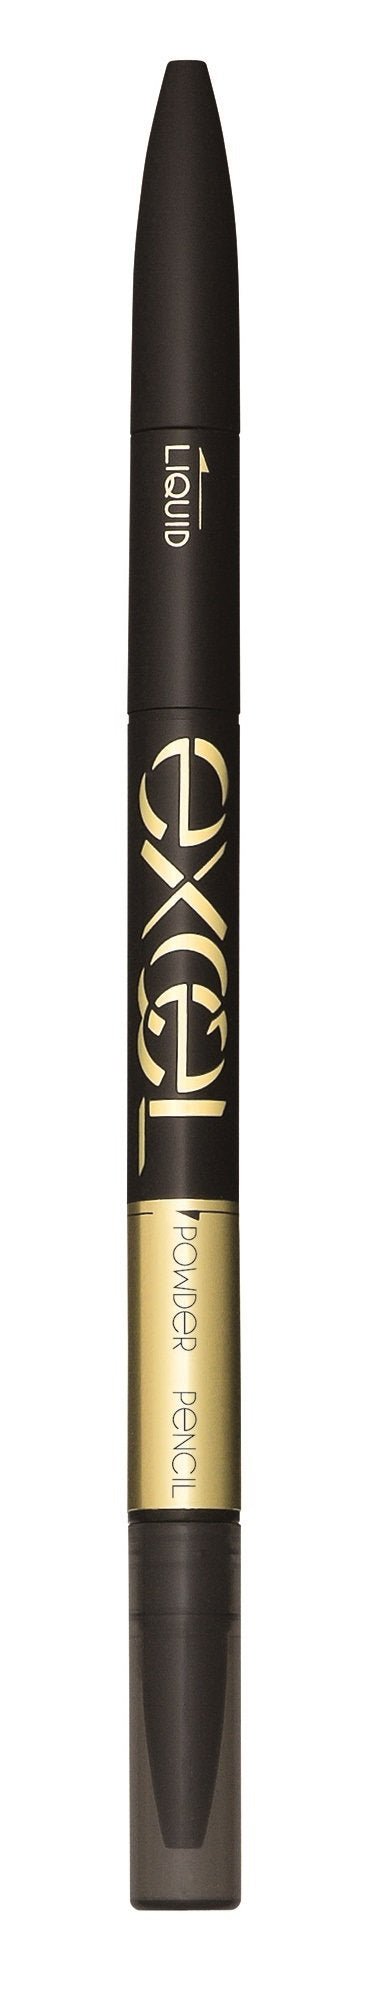 Excel Perfect Dark Brown Eyeliner NPL05 - Long - lasting Smooth Application